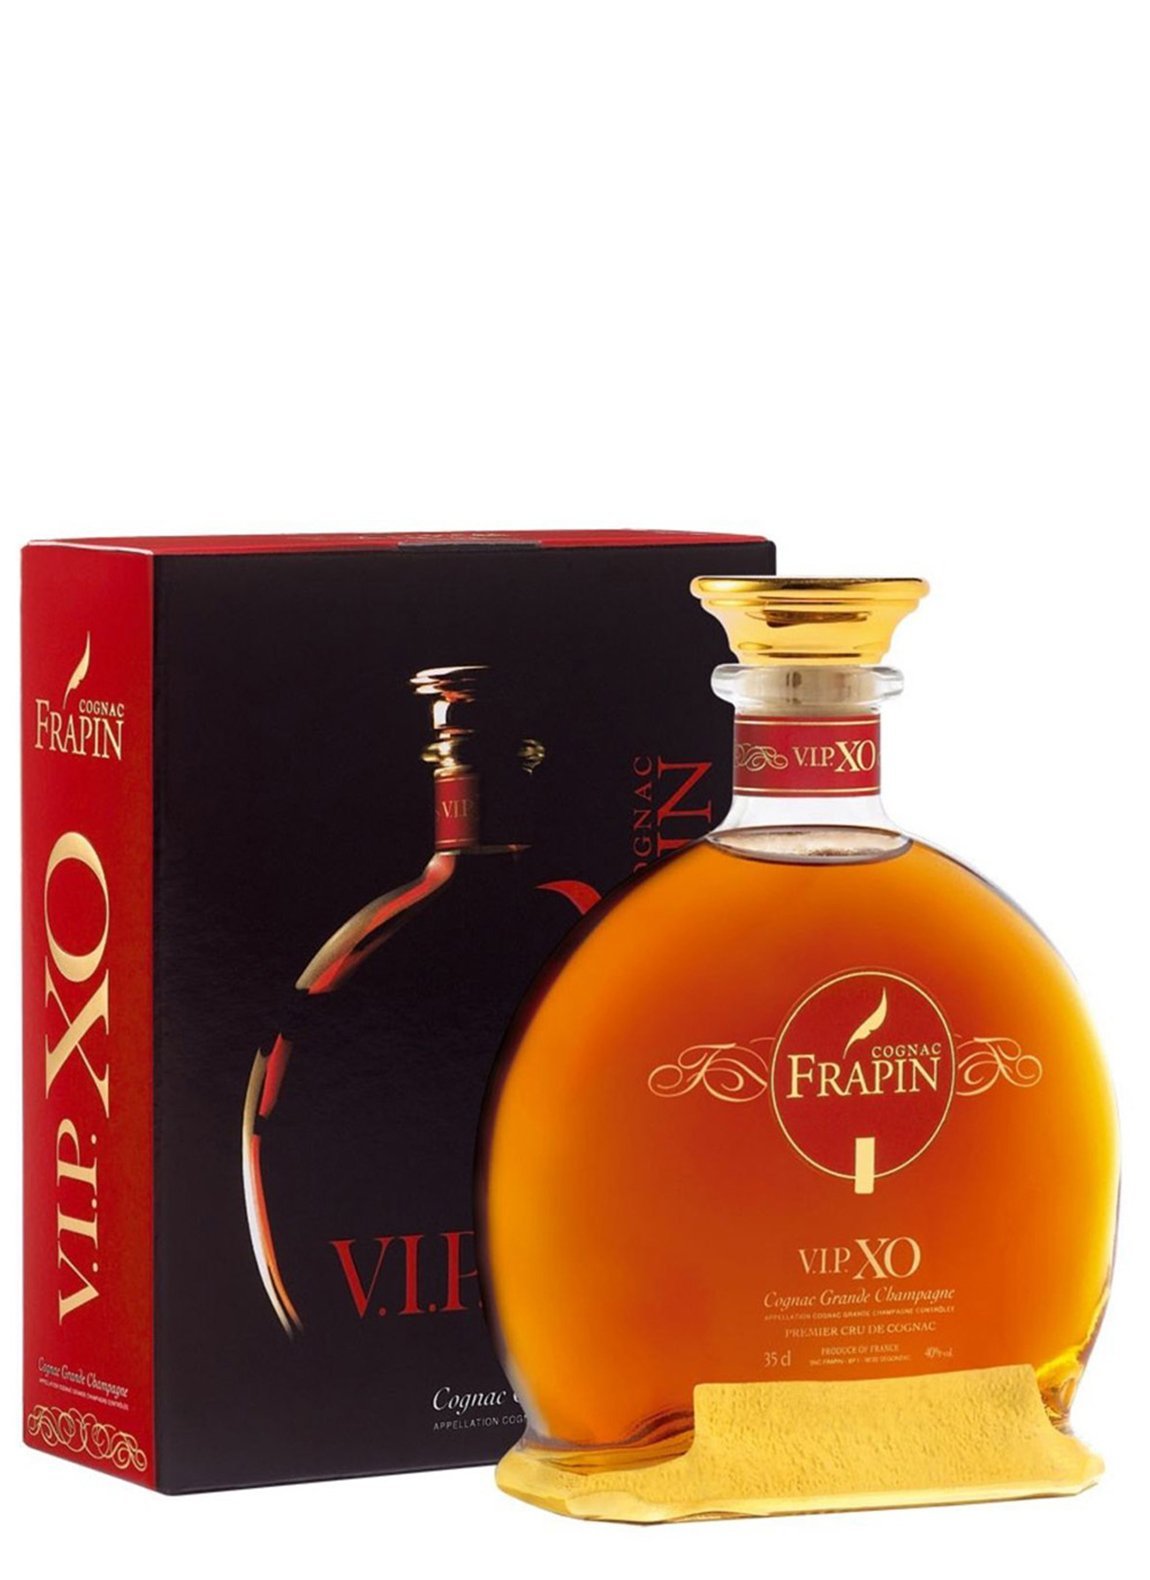 Frapin VIP XO 350ml Cognac - Cognac - Liquor Wine Cave